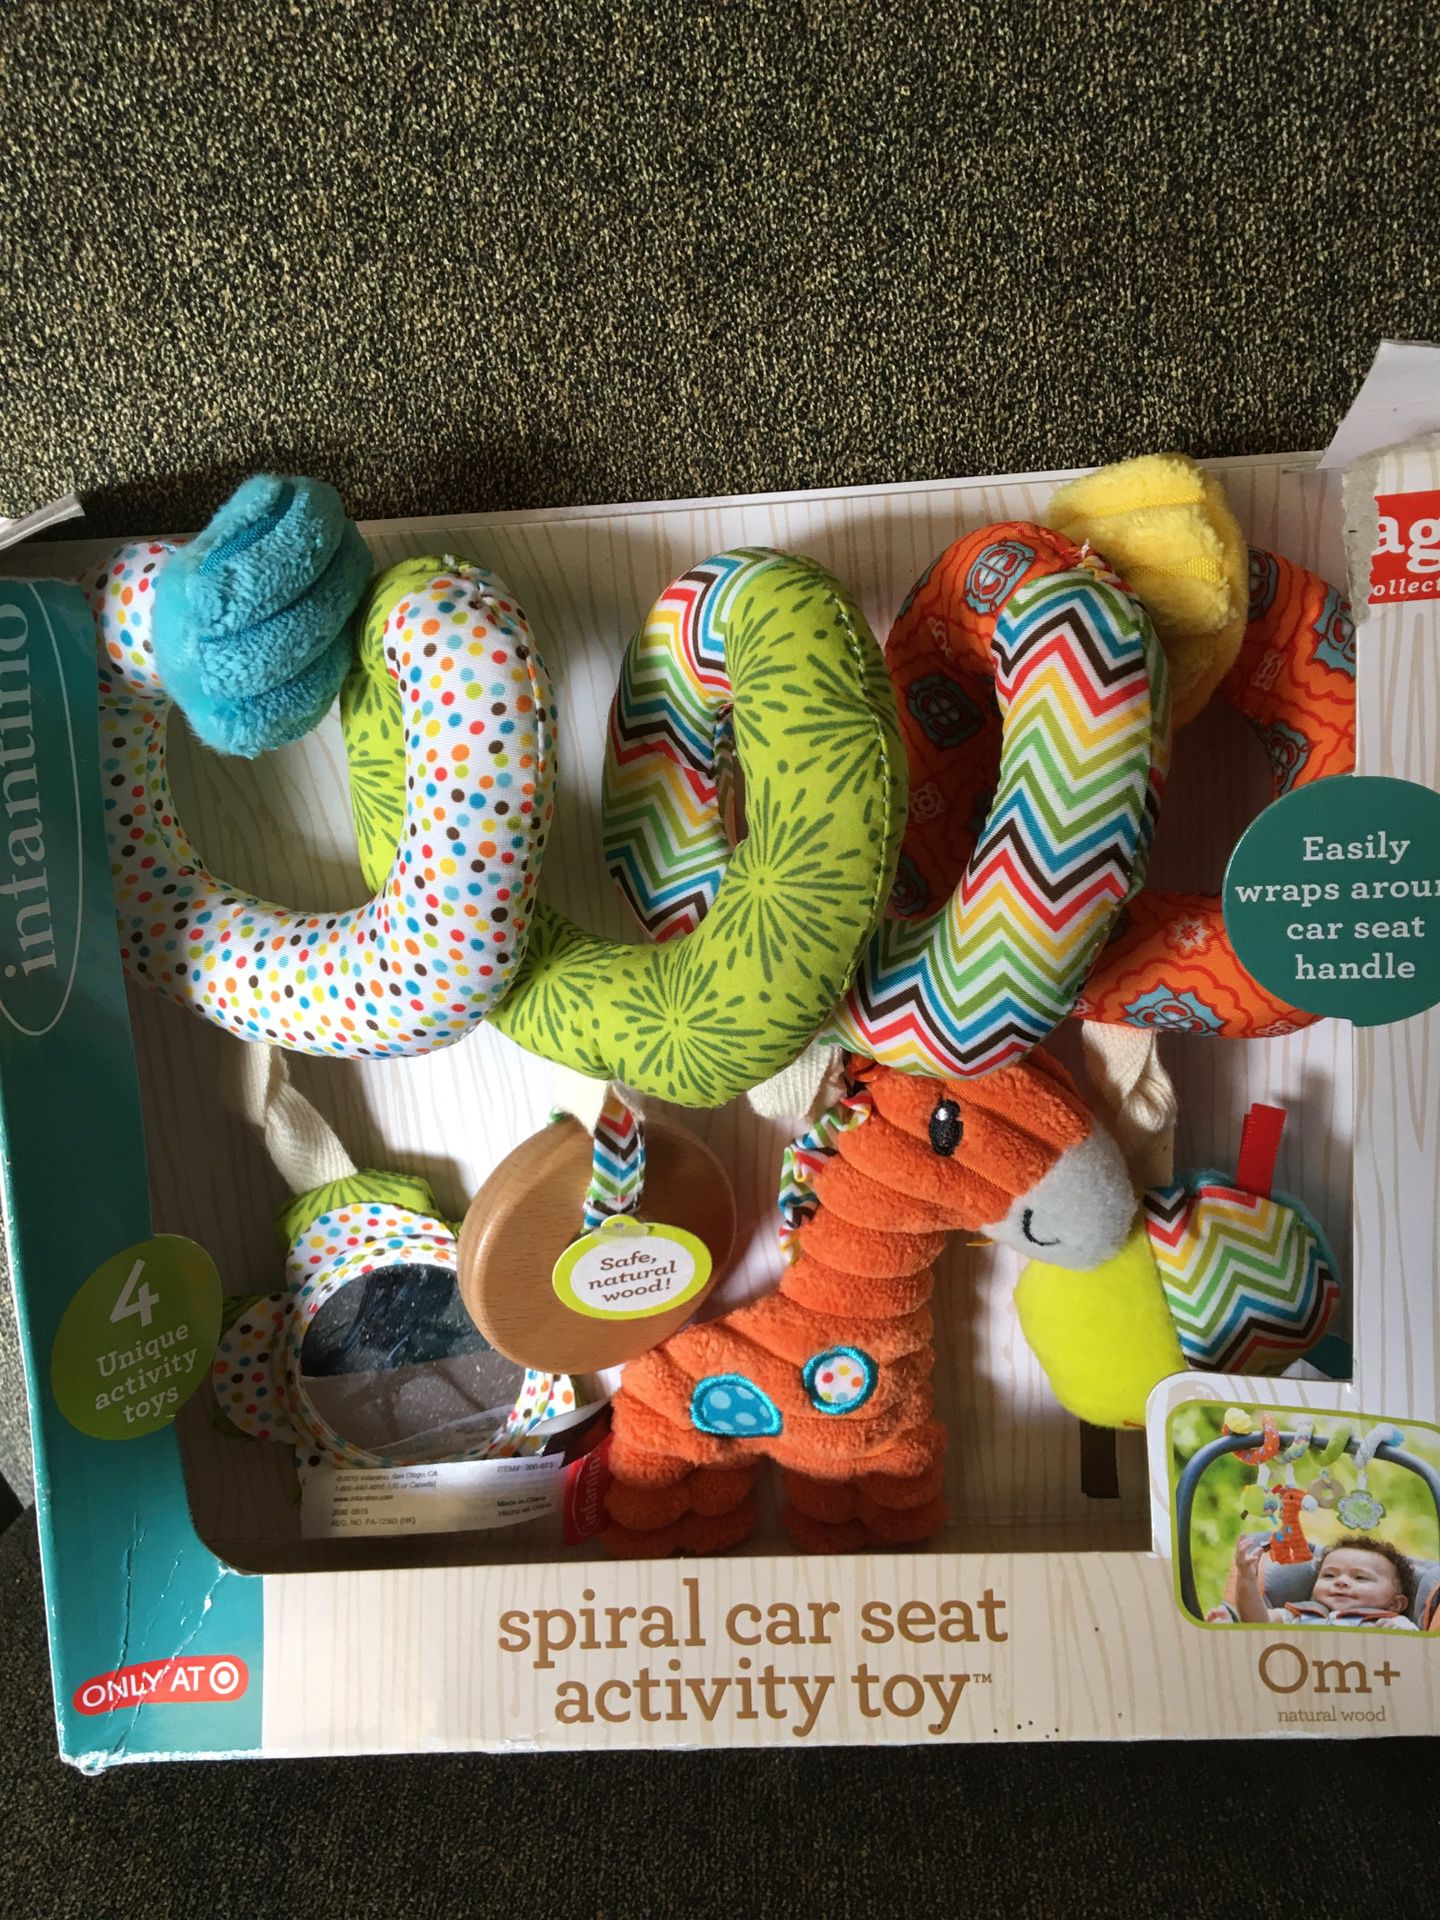 Spiral car seat activity toy